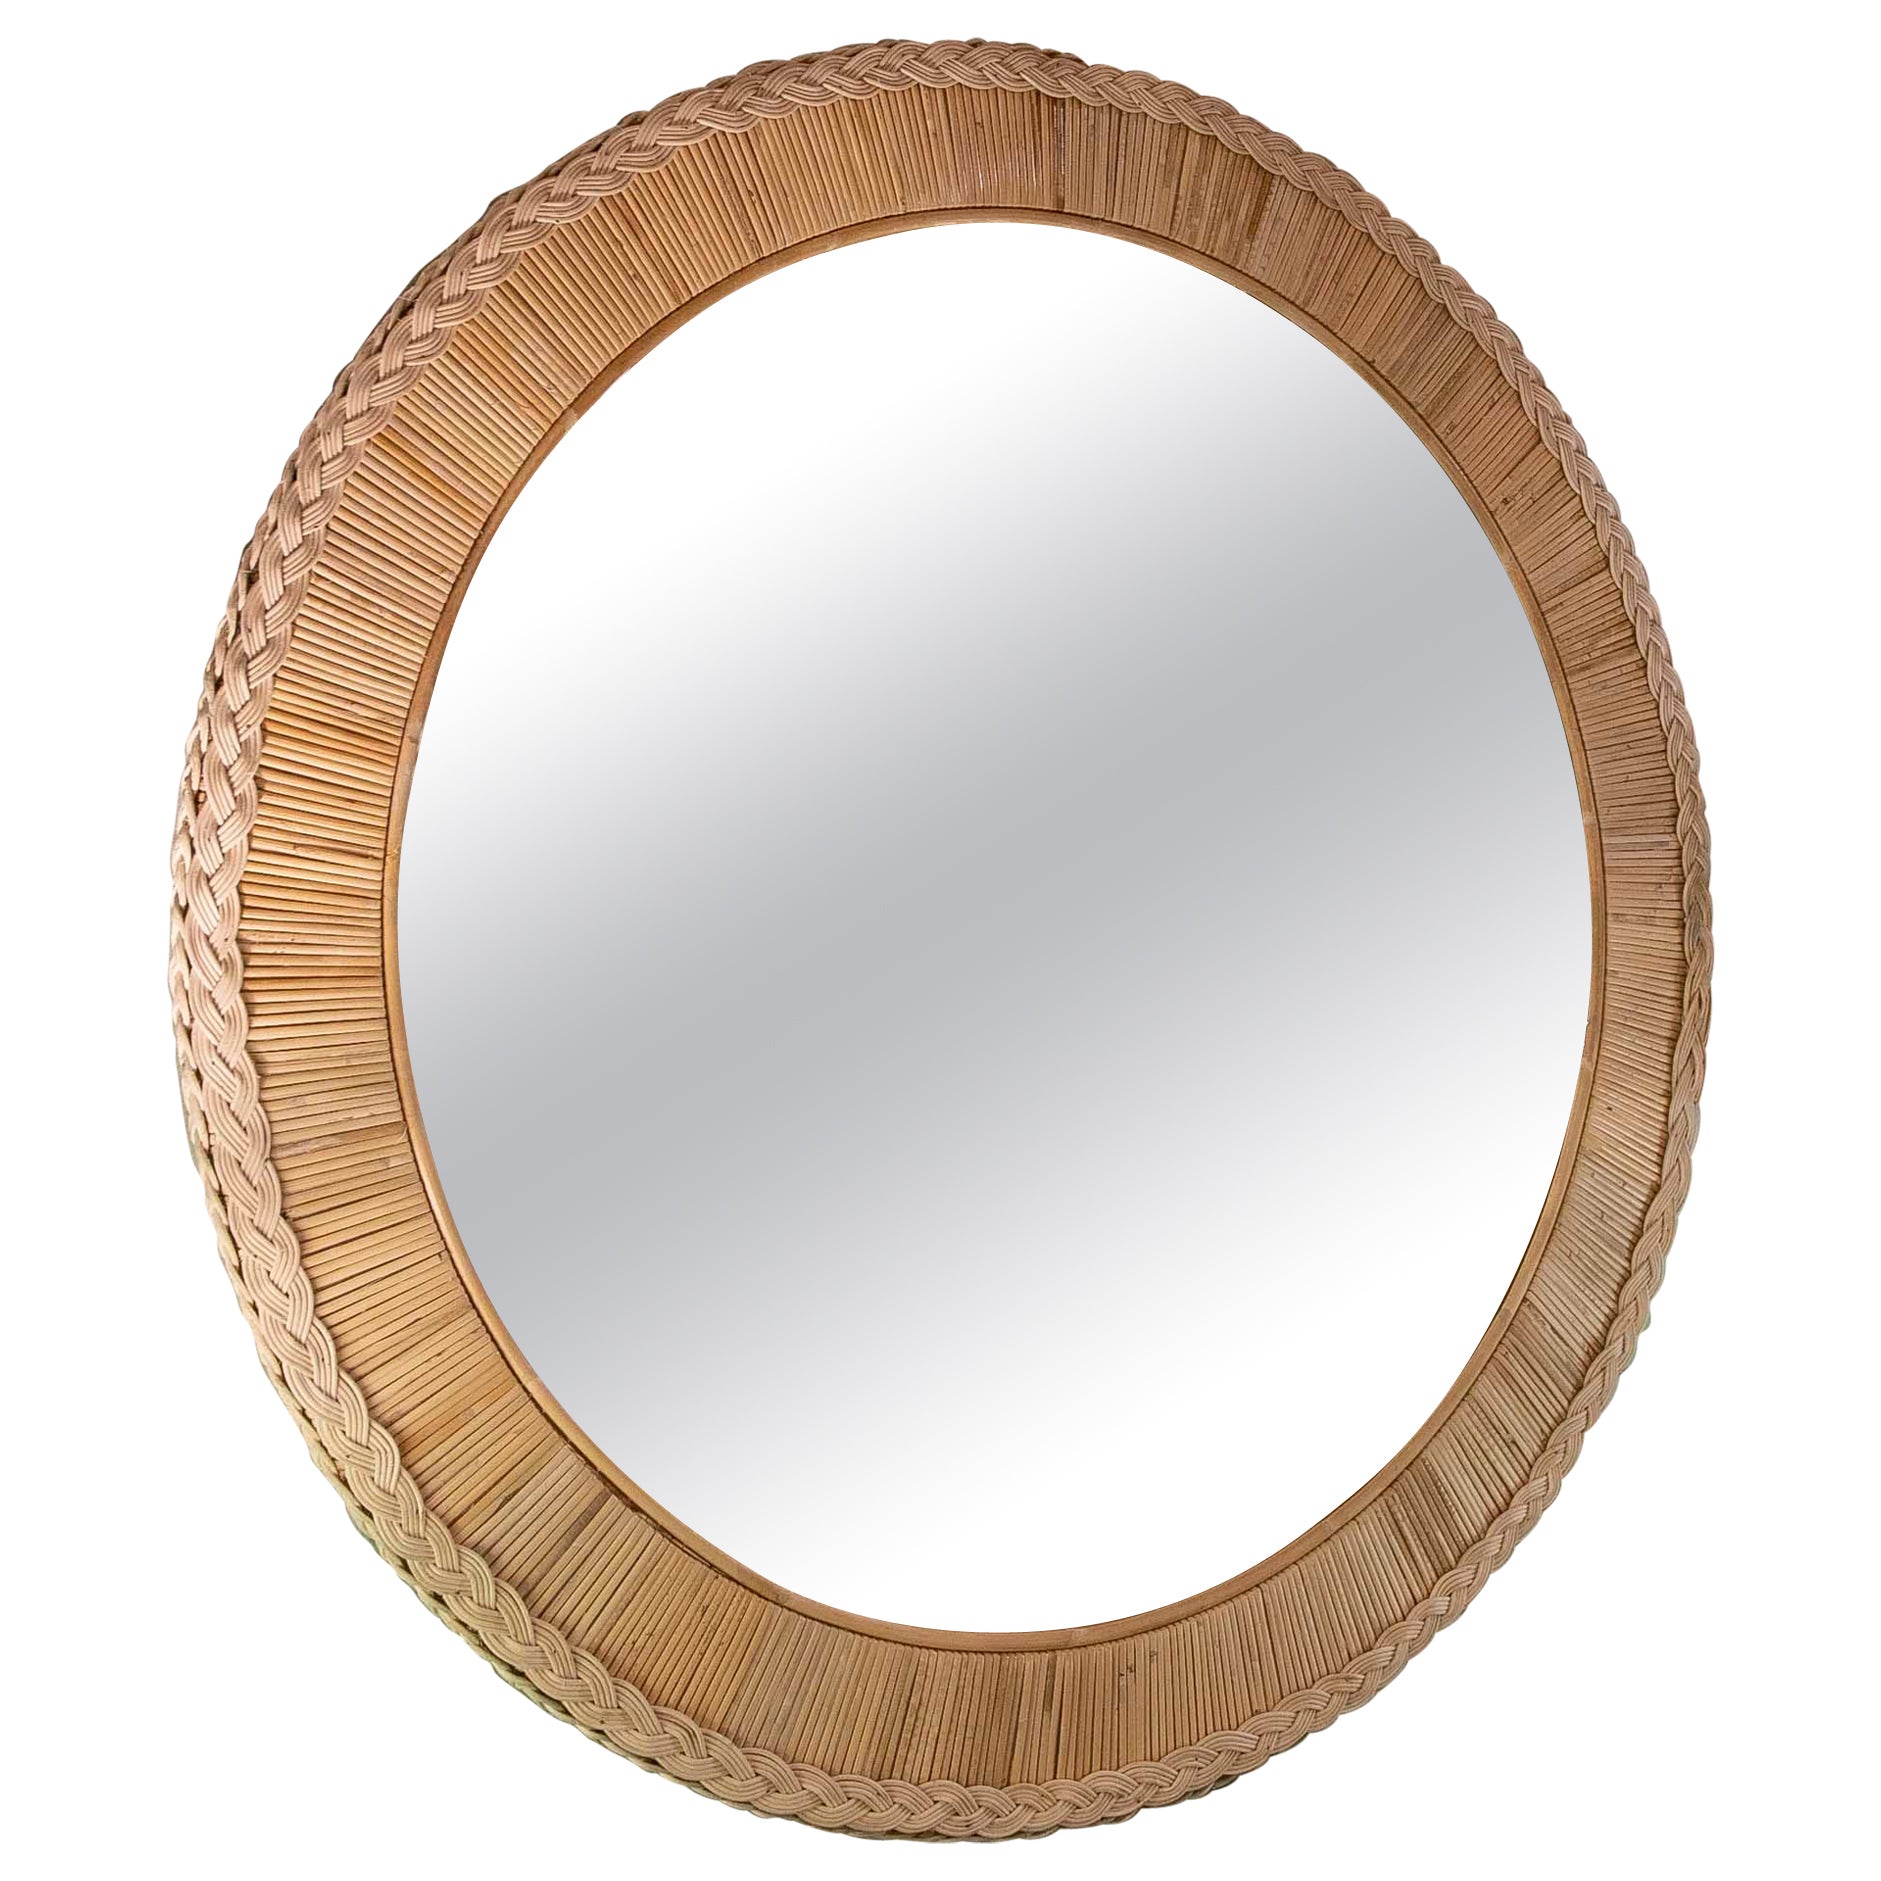 Handmade Round wicker wall mirror For Sale